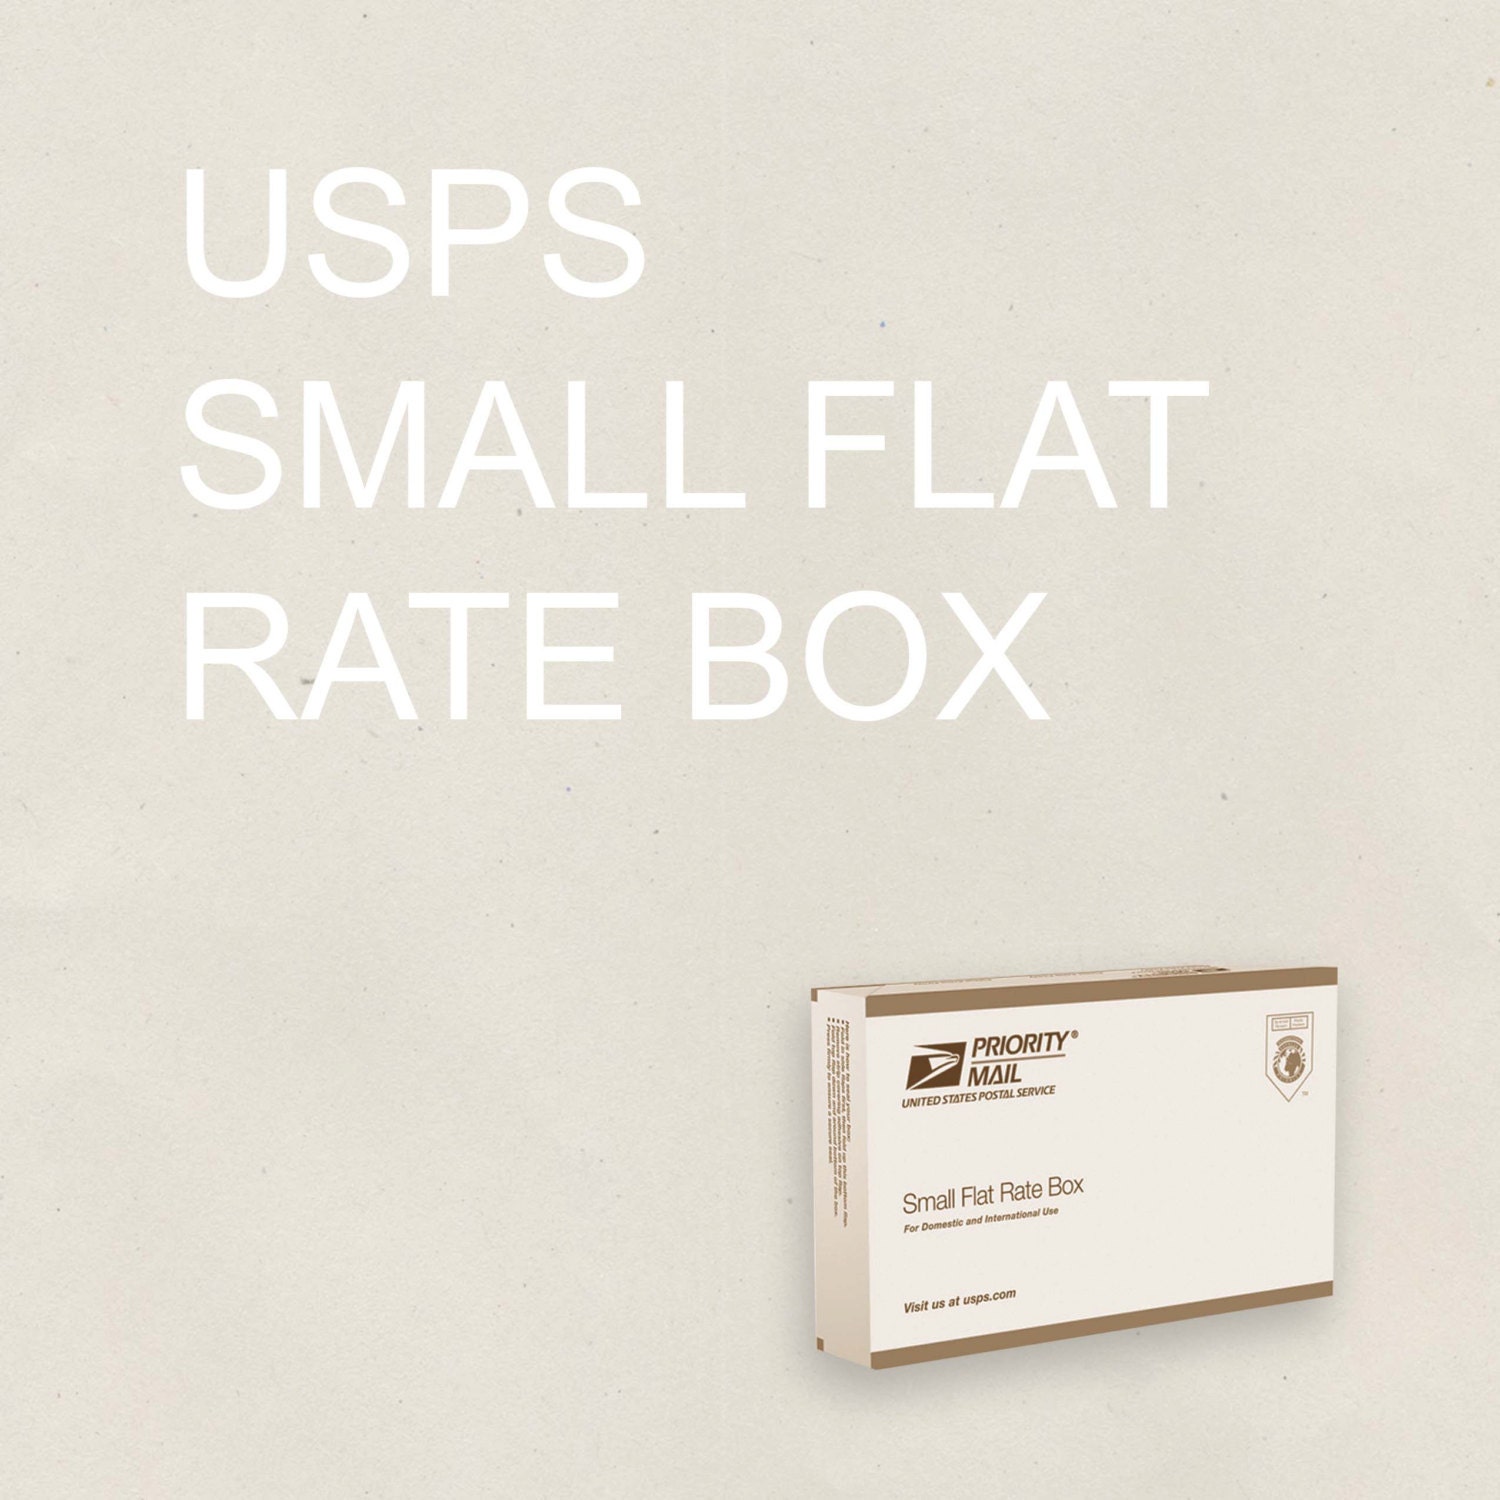 usps small flat rate box cost 2017